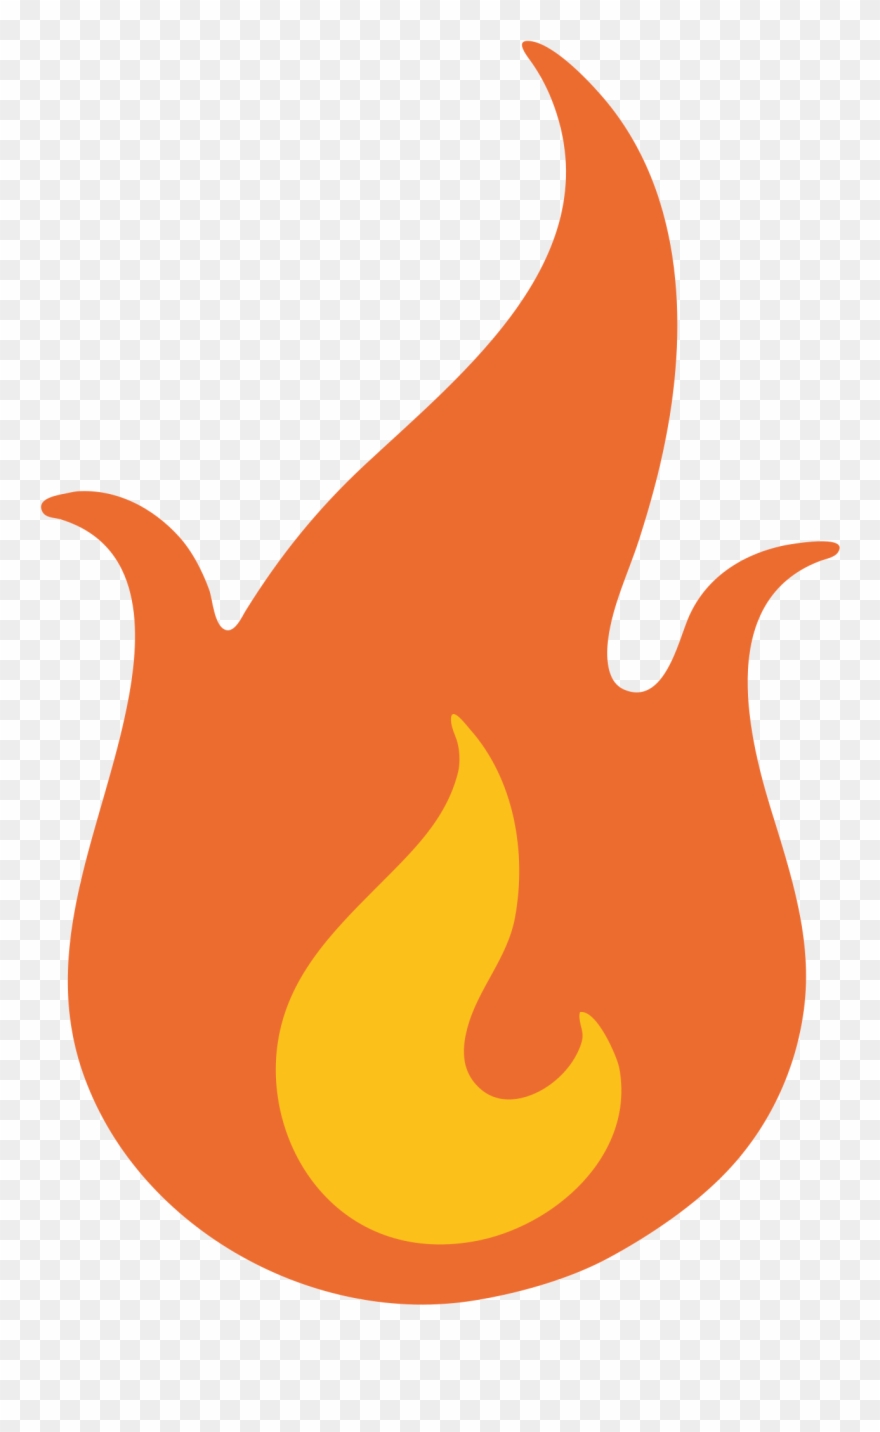 Flame clipart emoji.